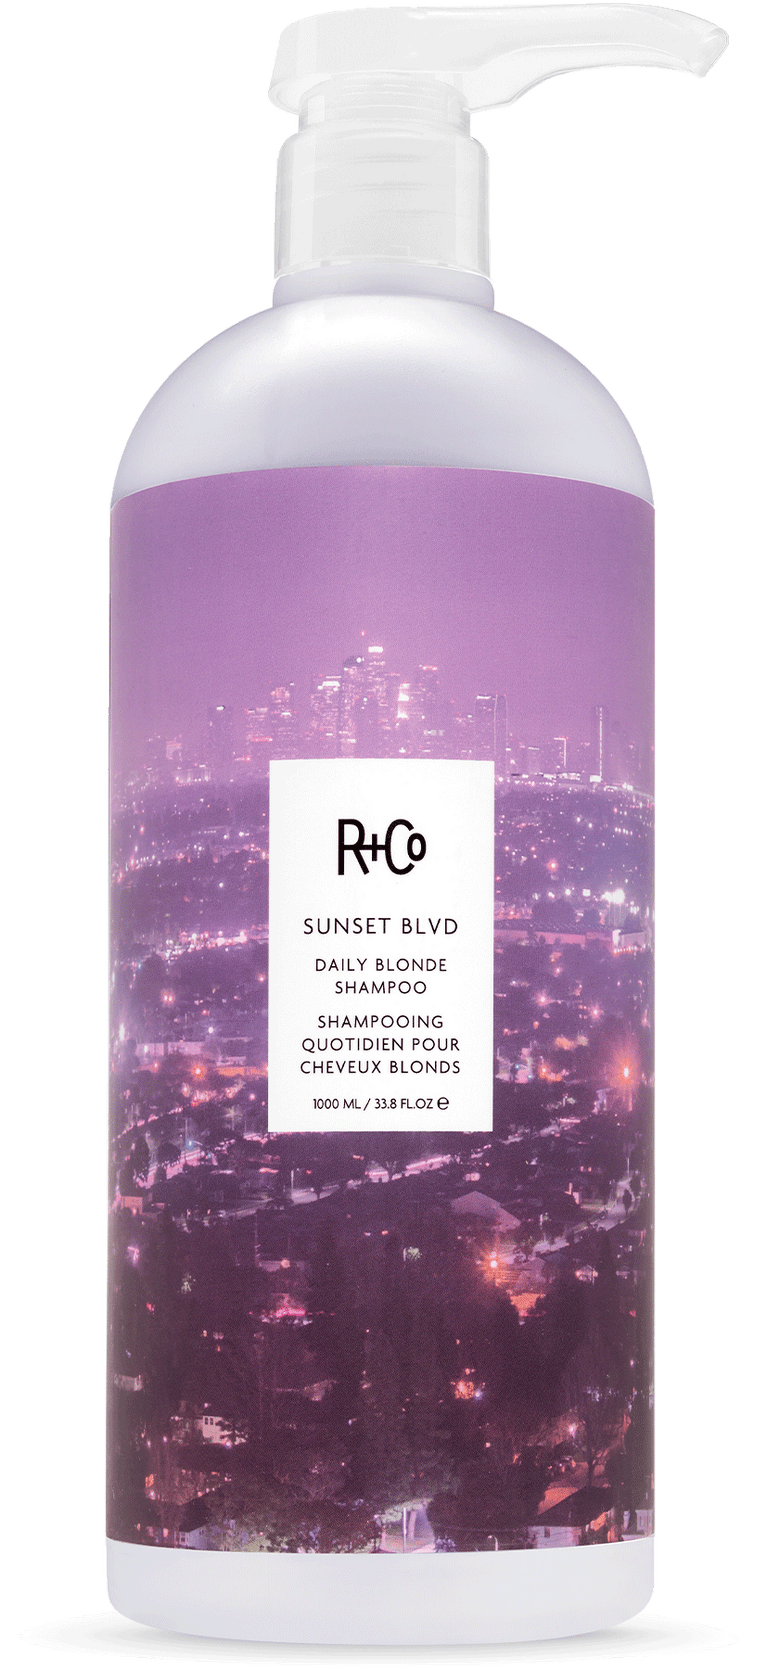 R+CO-Sunset Blvd-Daily Blonde Shampoo